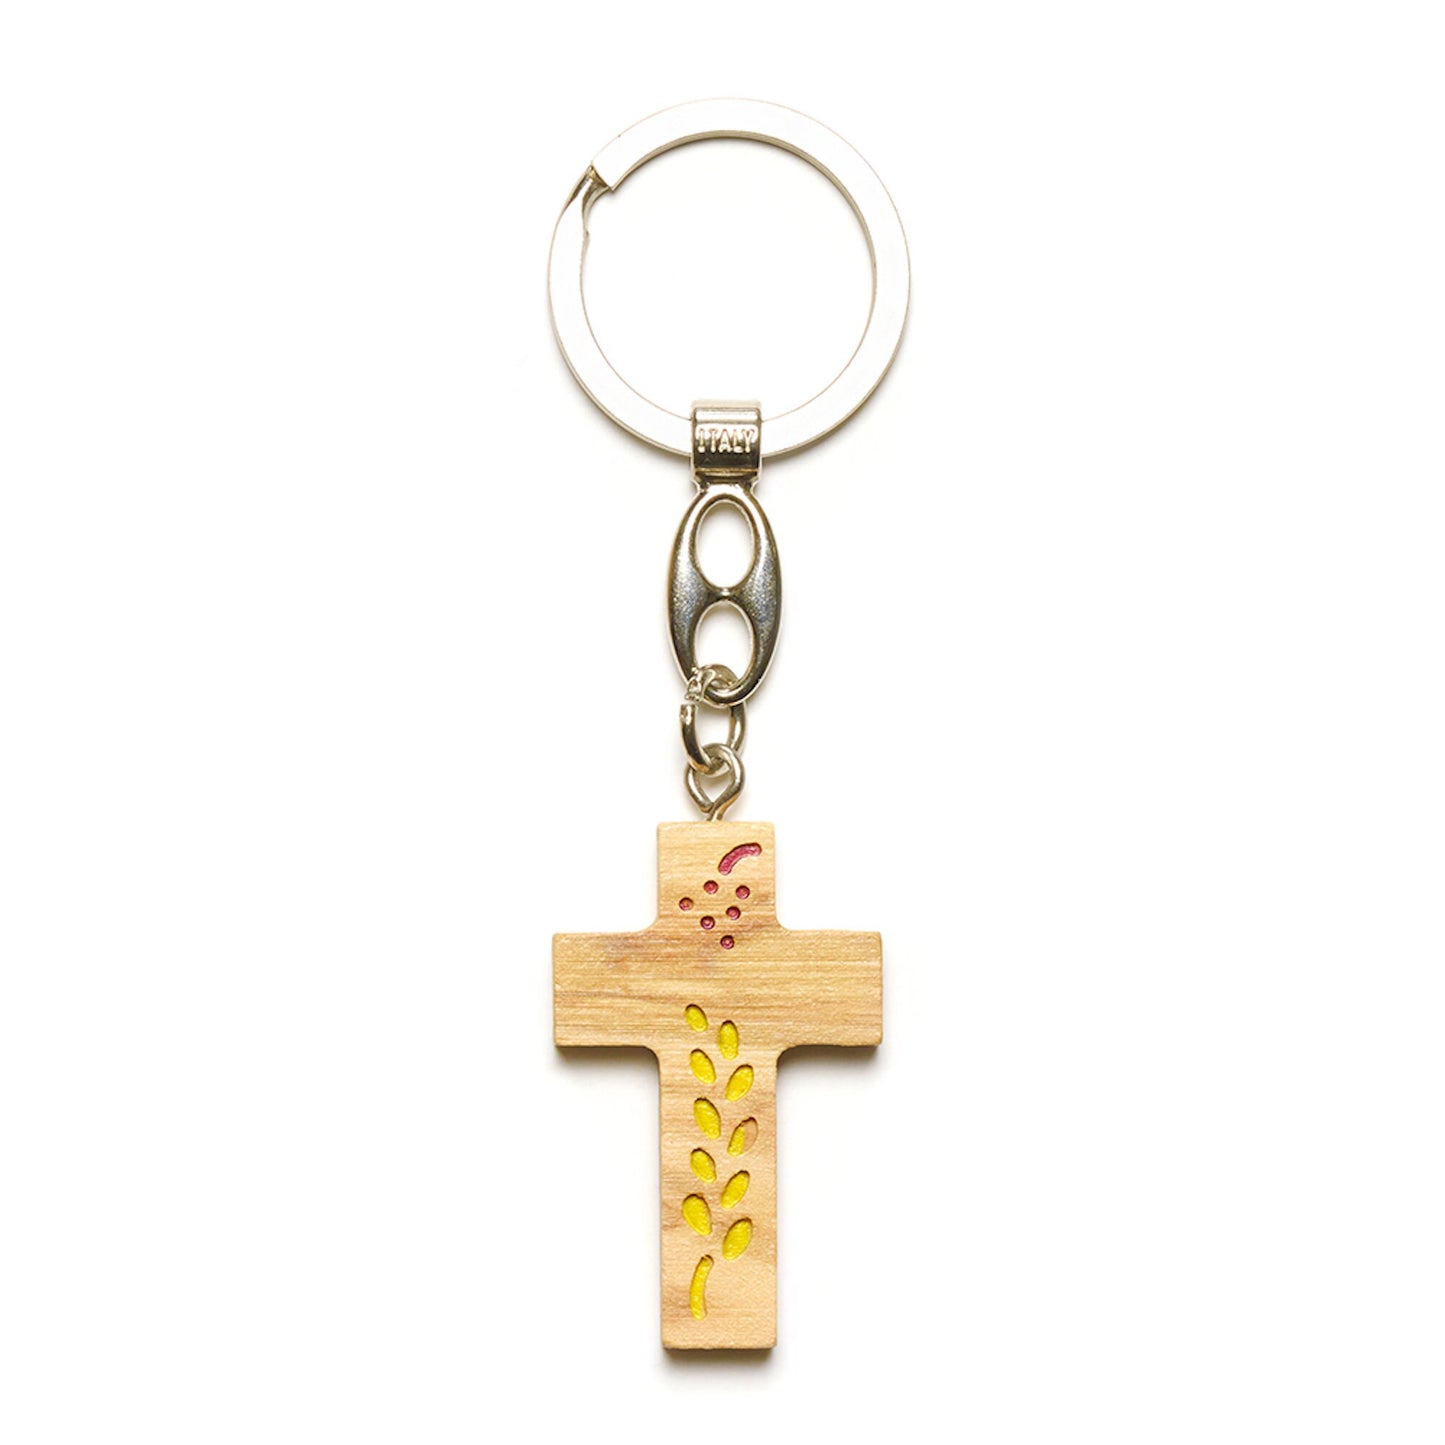 Prosperity cross olive wood engraved keychain handmade in Nazareth